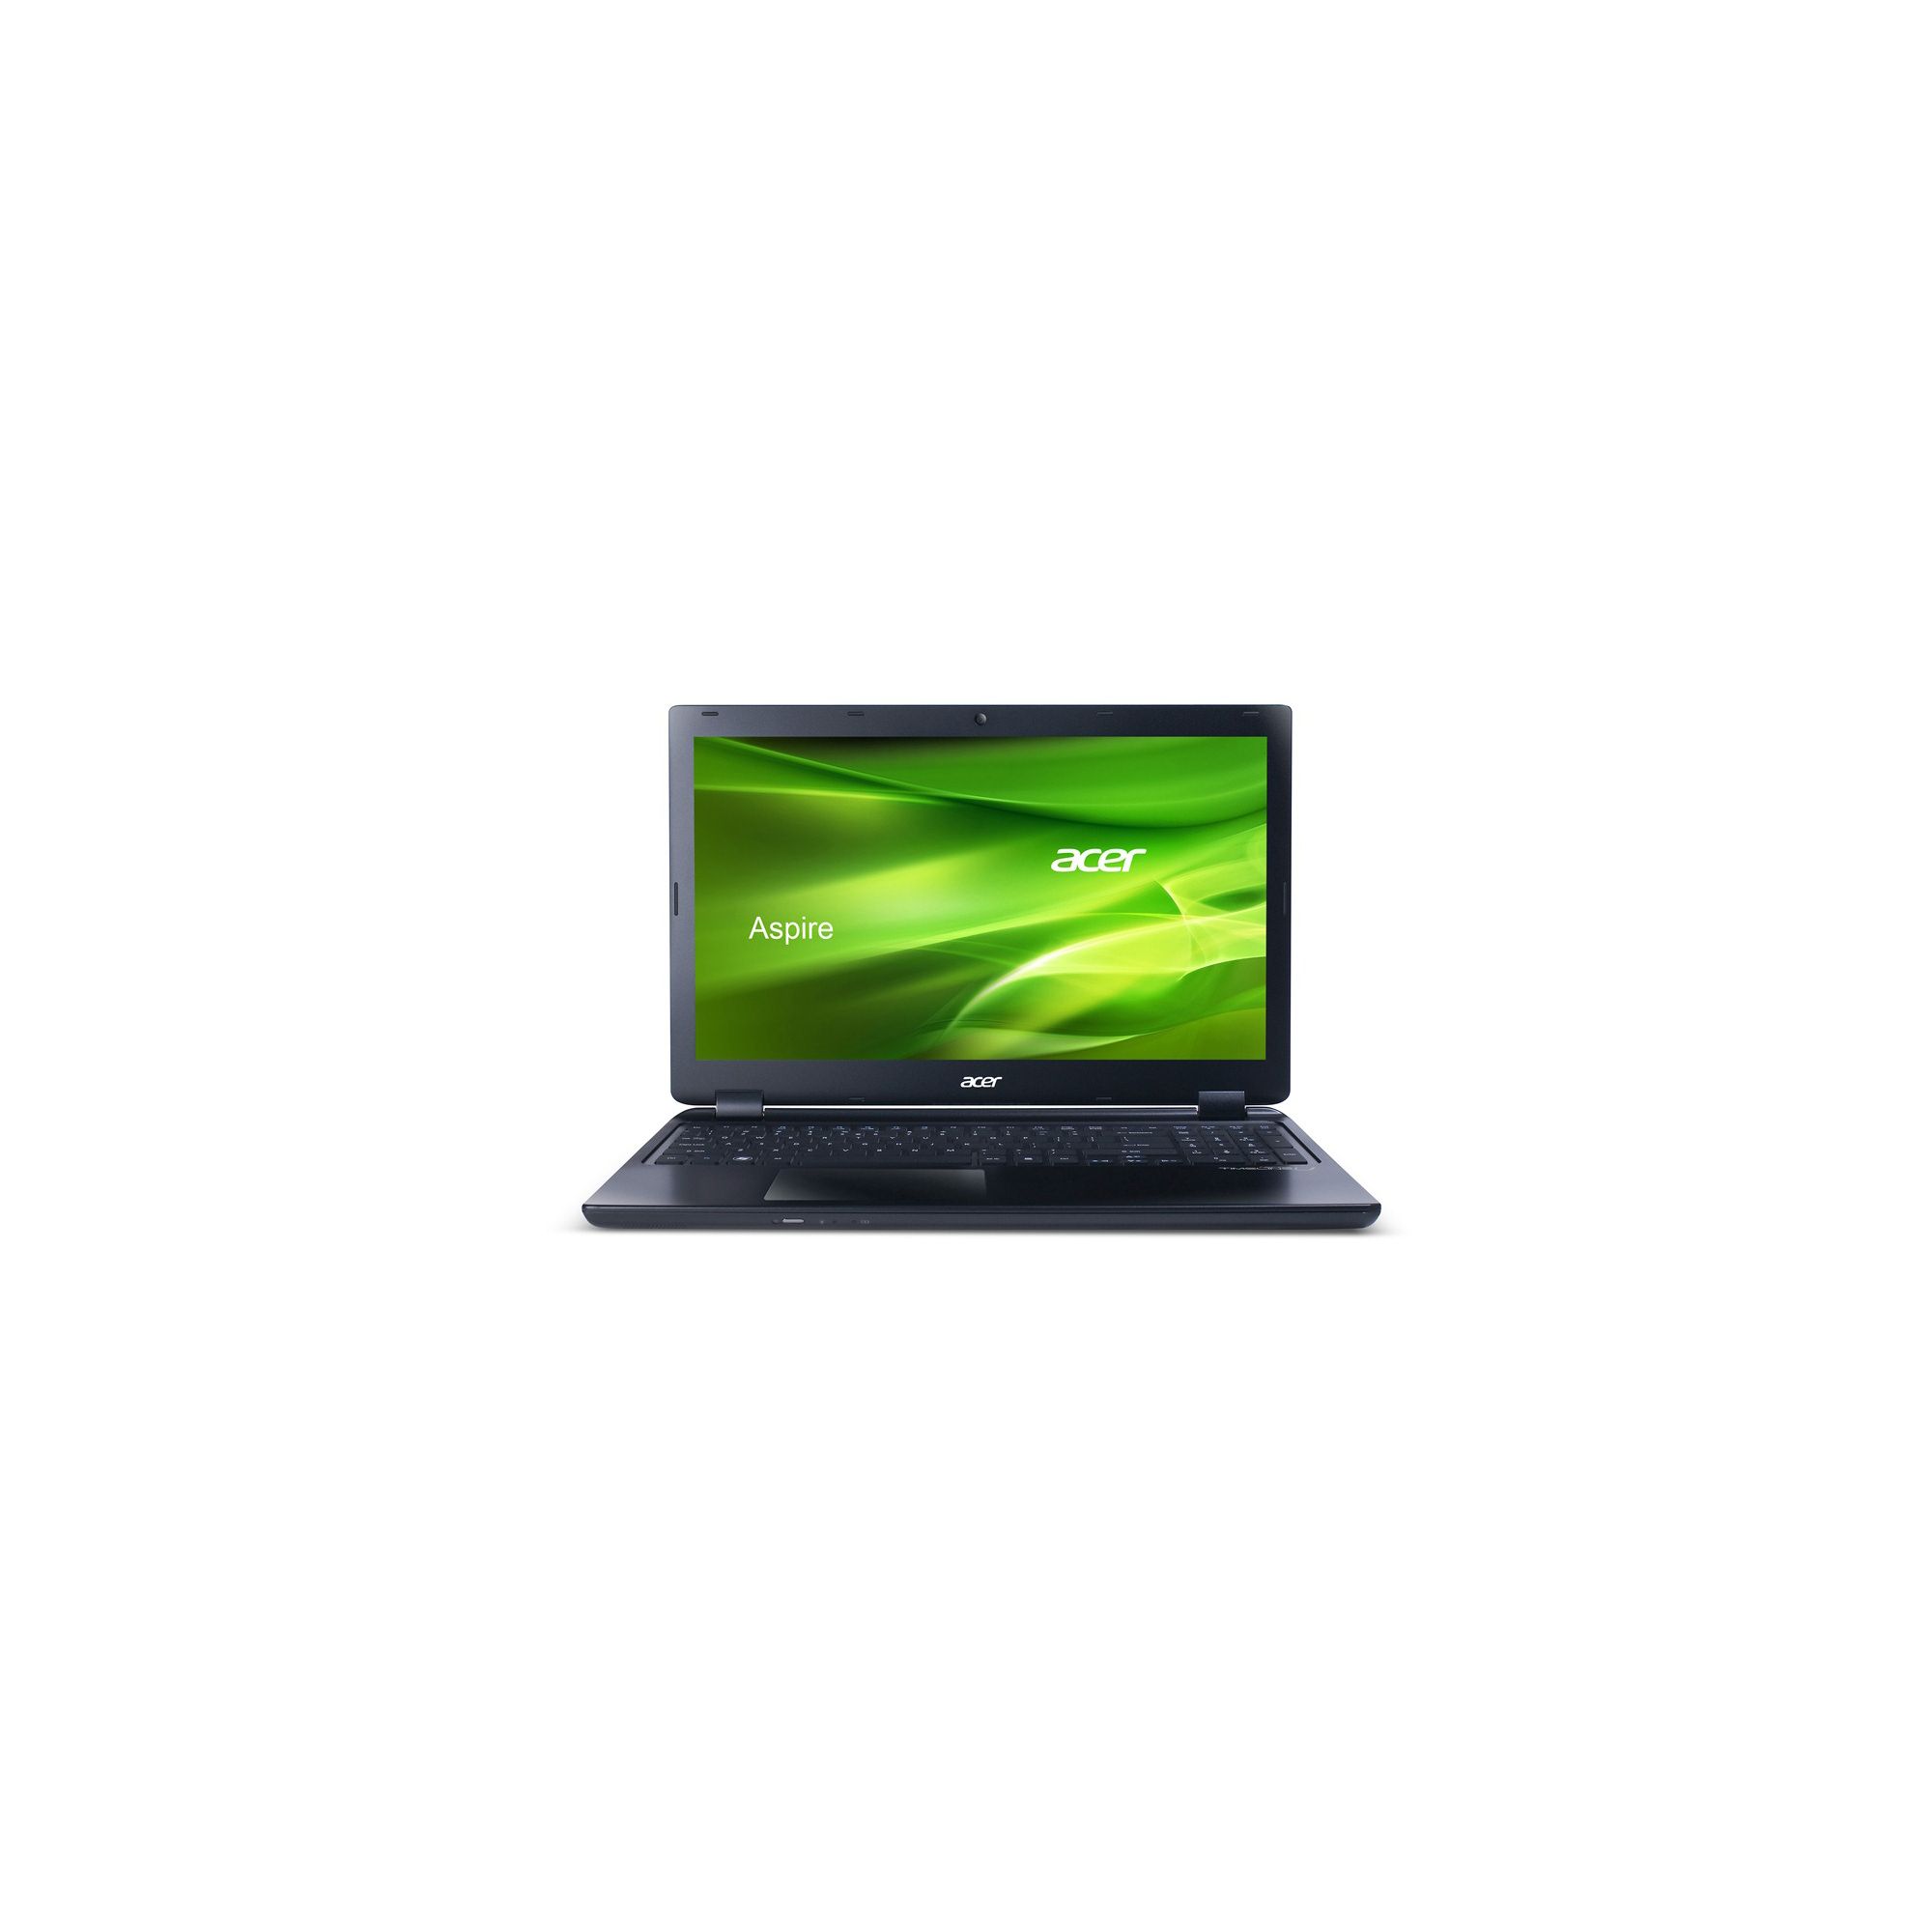 Acer Aspire M3-581PTG 15.6-inch laptop, Intel Core i7, 4GB RAM, 500GB, Windows 7, Black